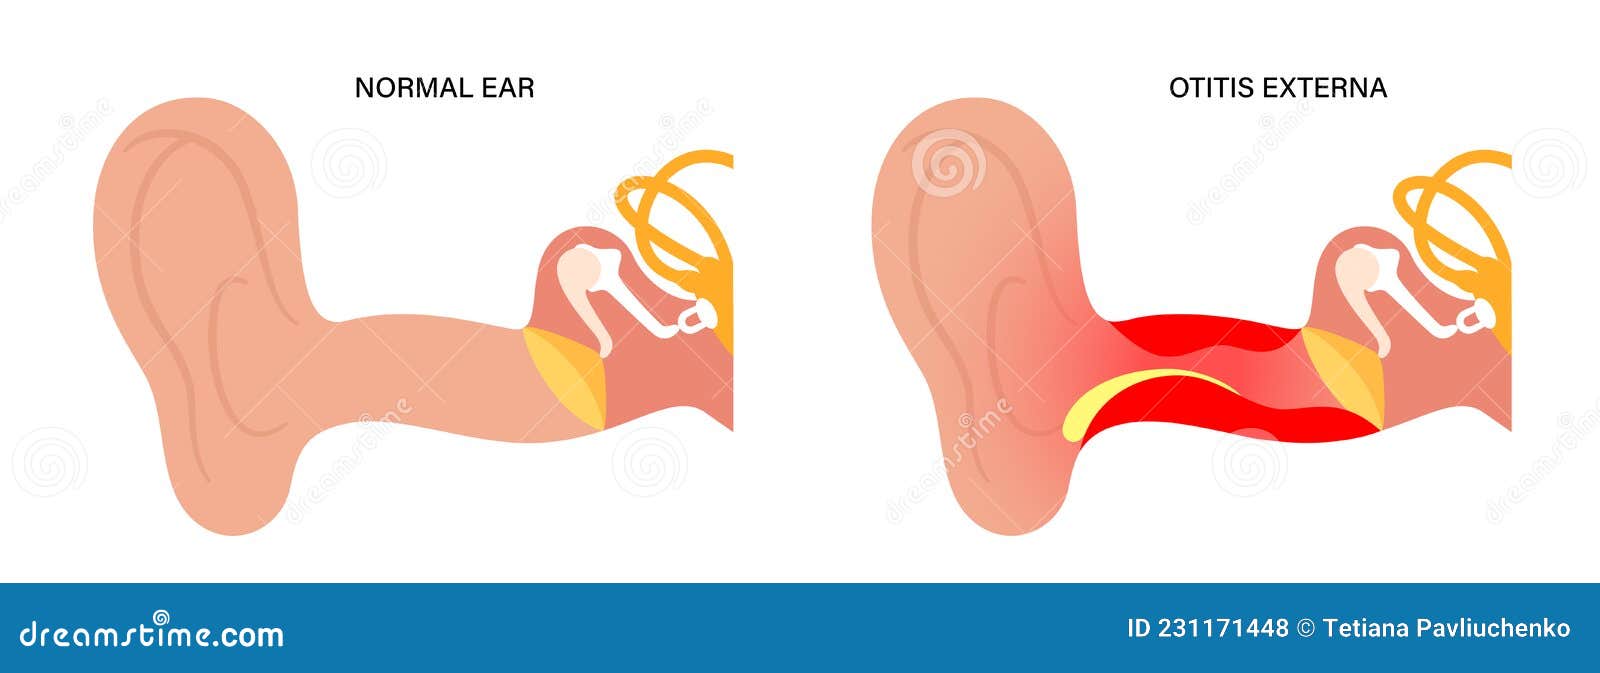 swimmers ear otitis